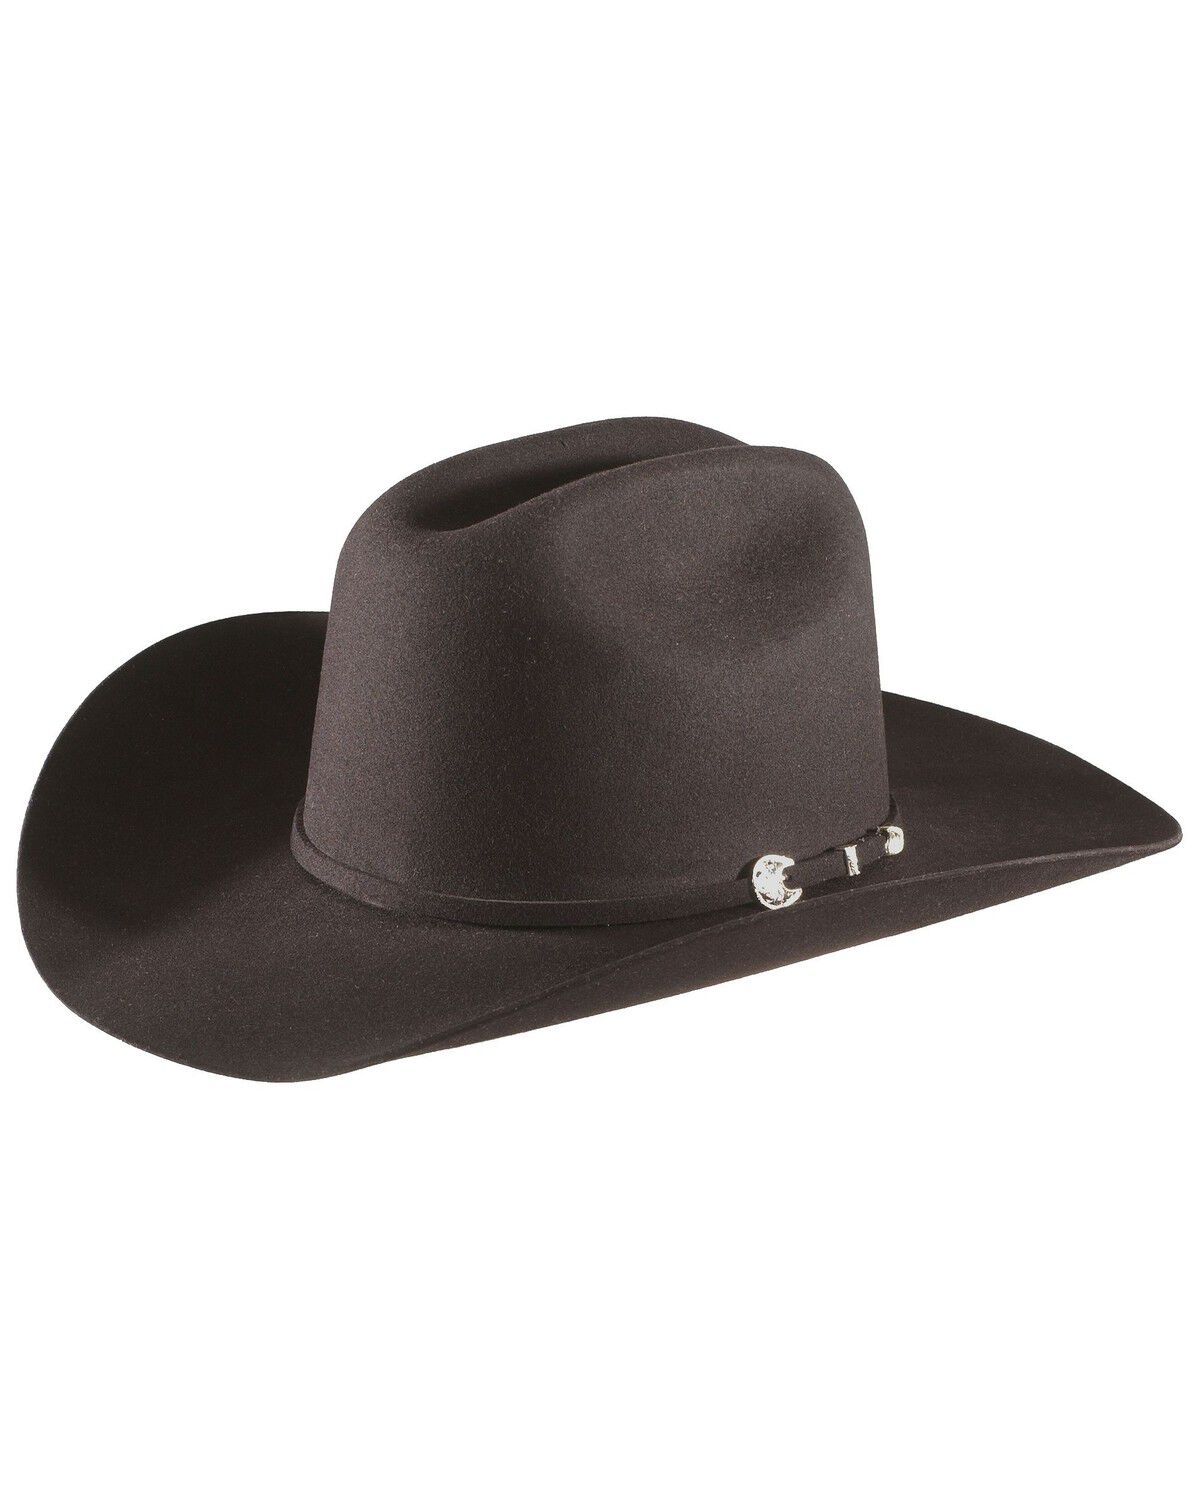 american cowboy hats